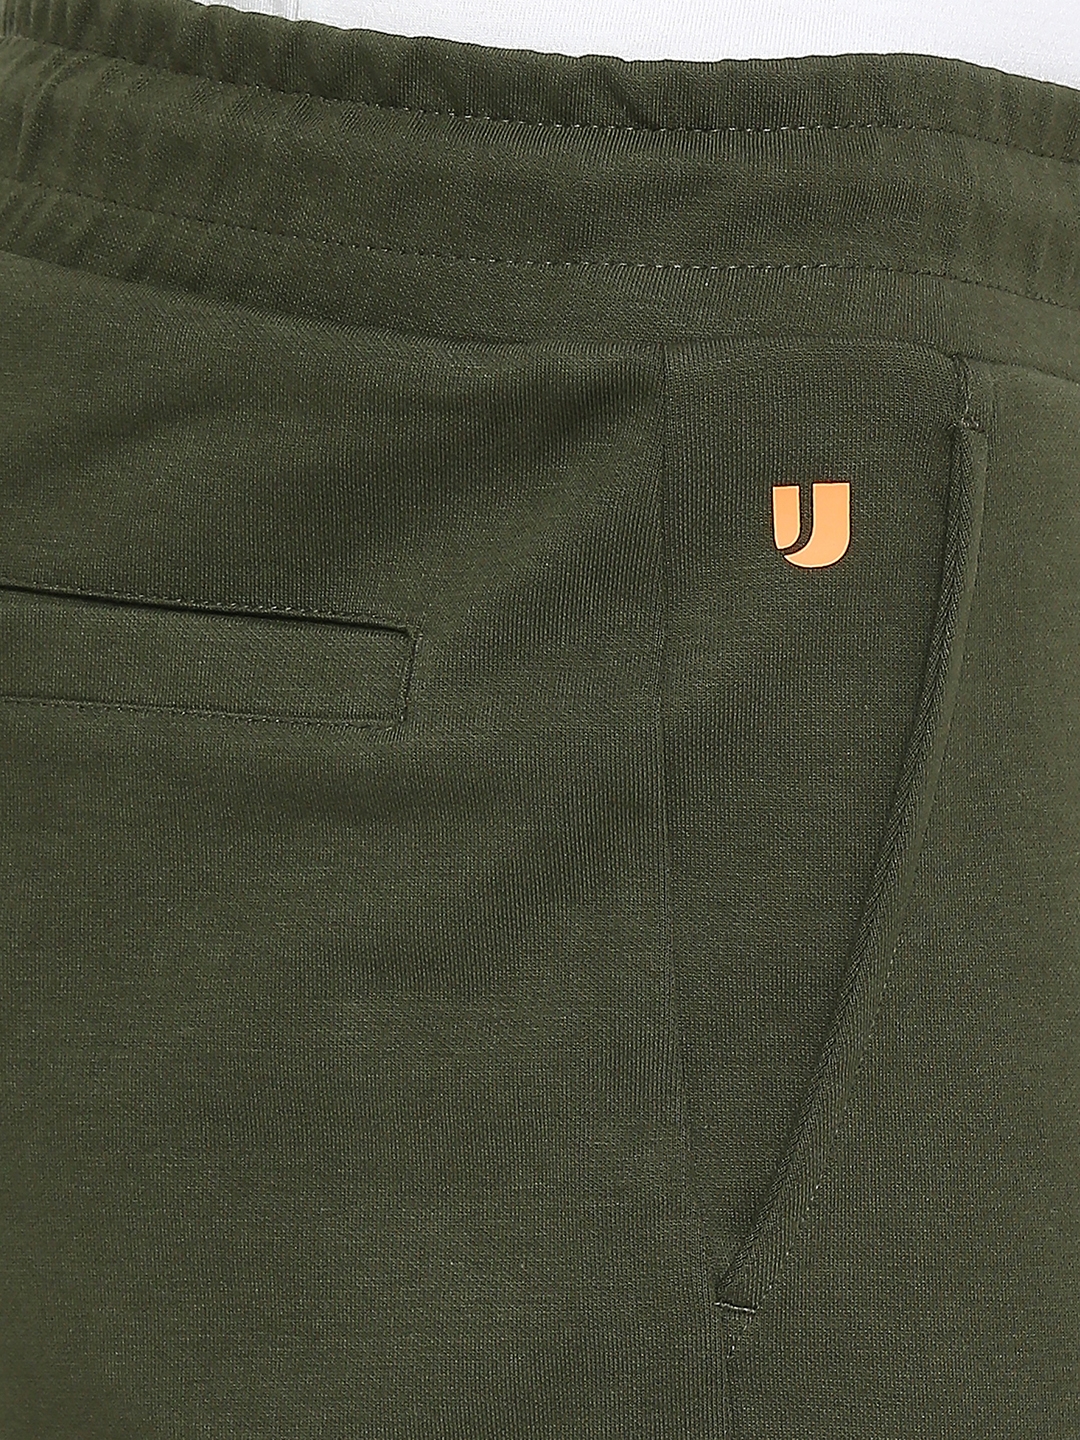 spykar | Underjeans by Spykar Men Knitted Rifle Green Cotton Pyjama 4